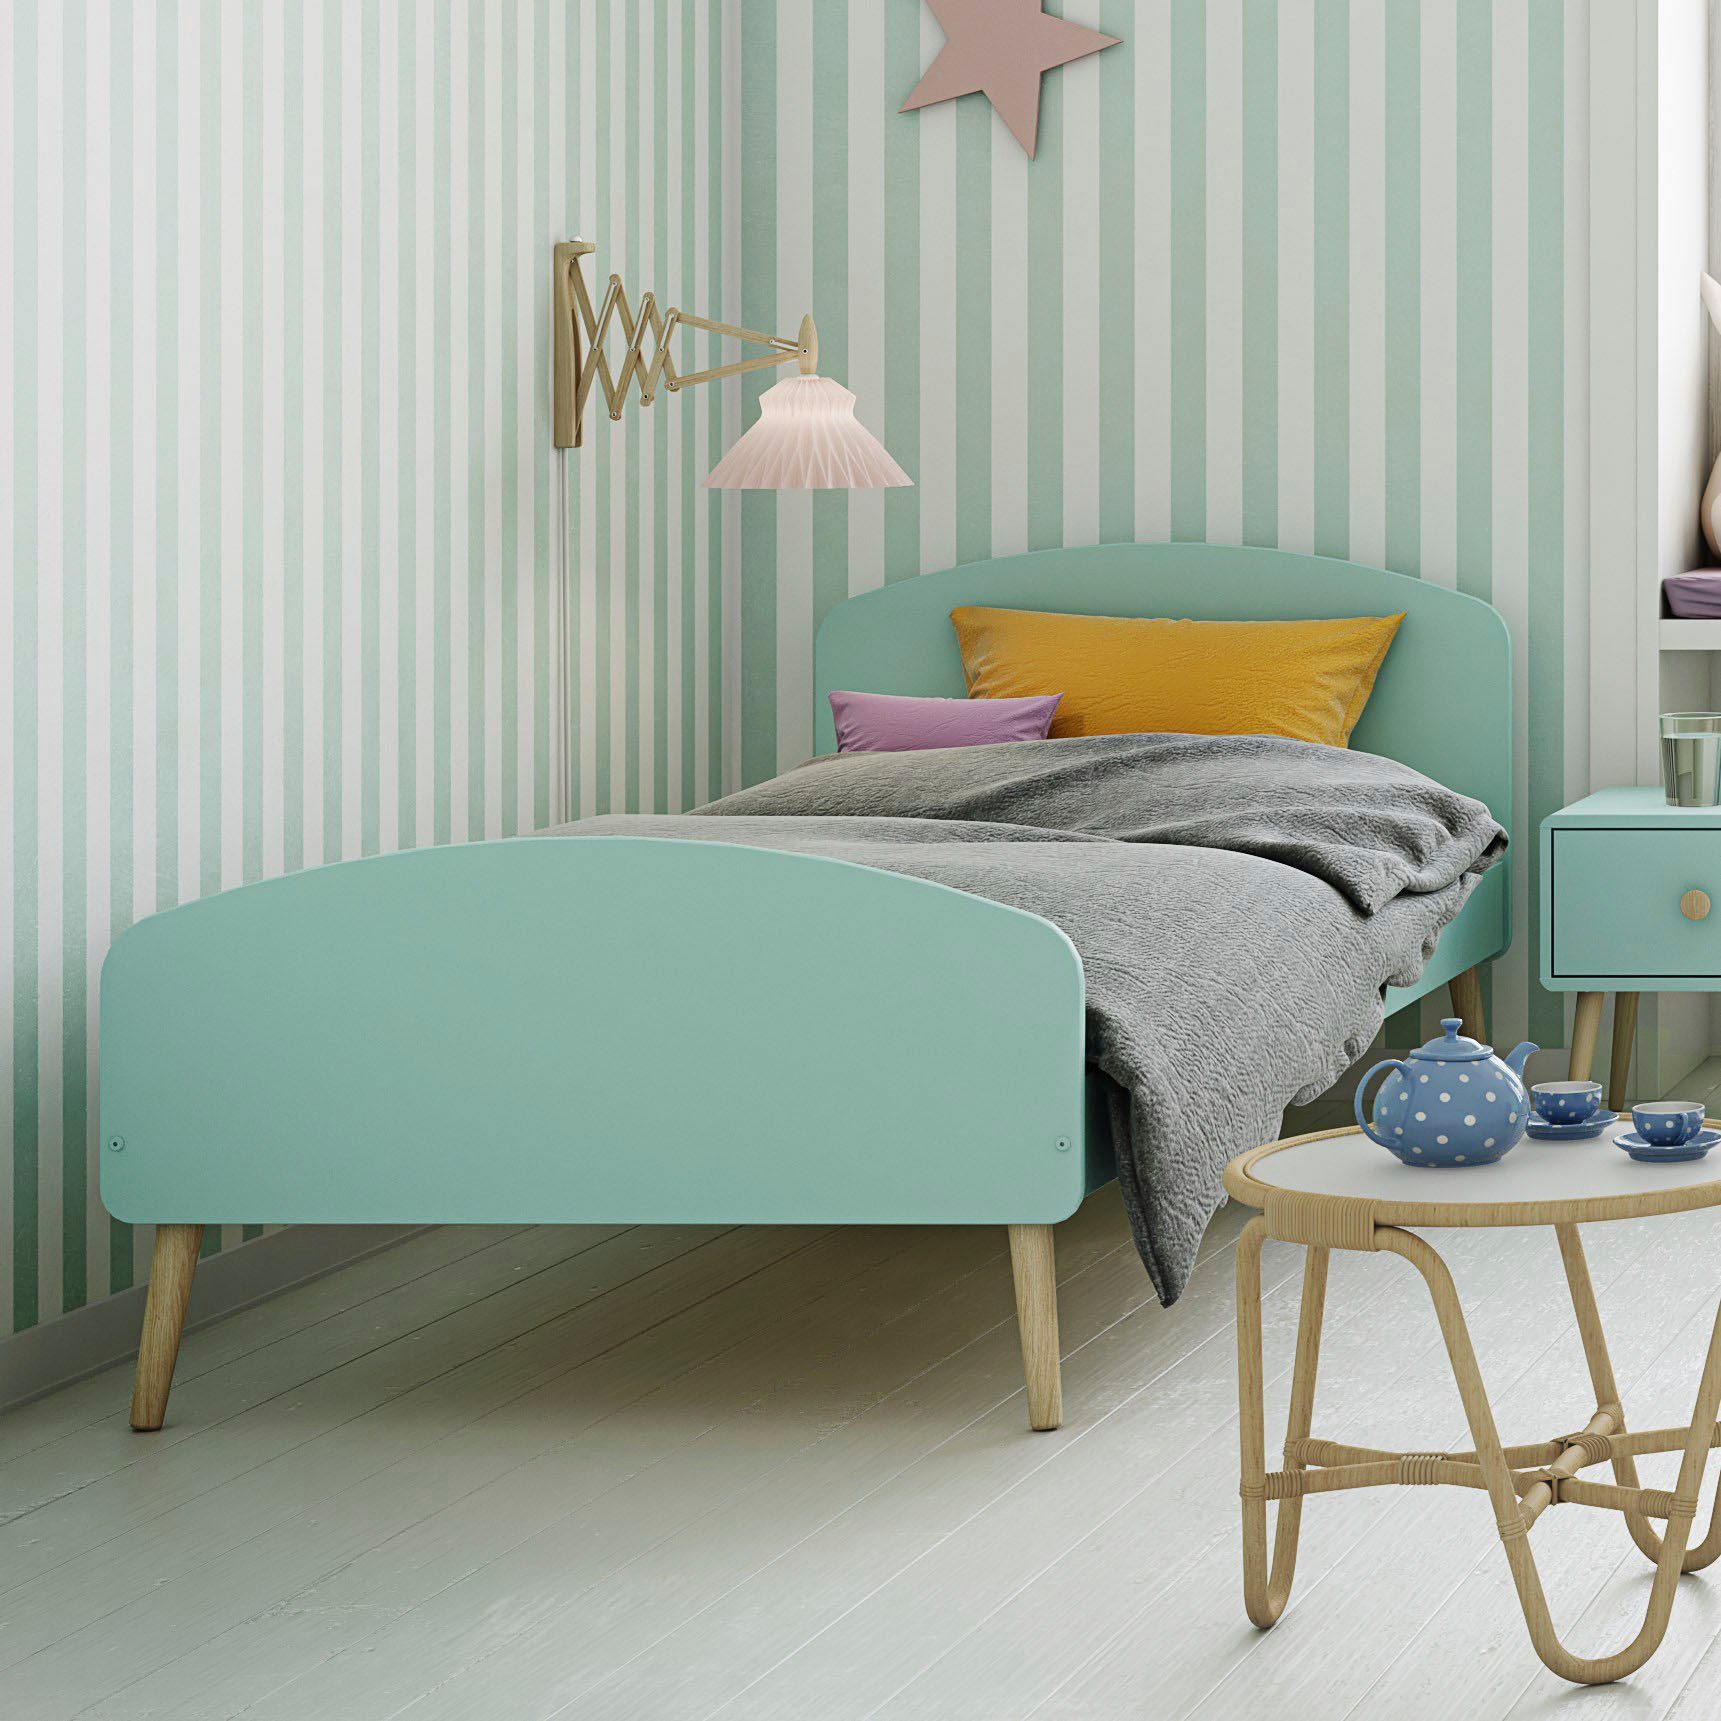 andas Bett GAIA, für Kinder und Jugendzimmer in skandinavischem Design Cool Mint | Cool Mint | Cool Mint | Cool Mint